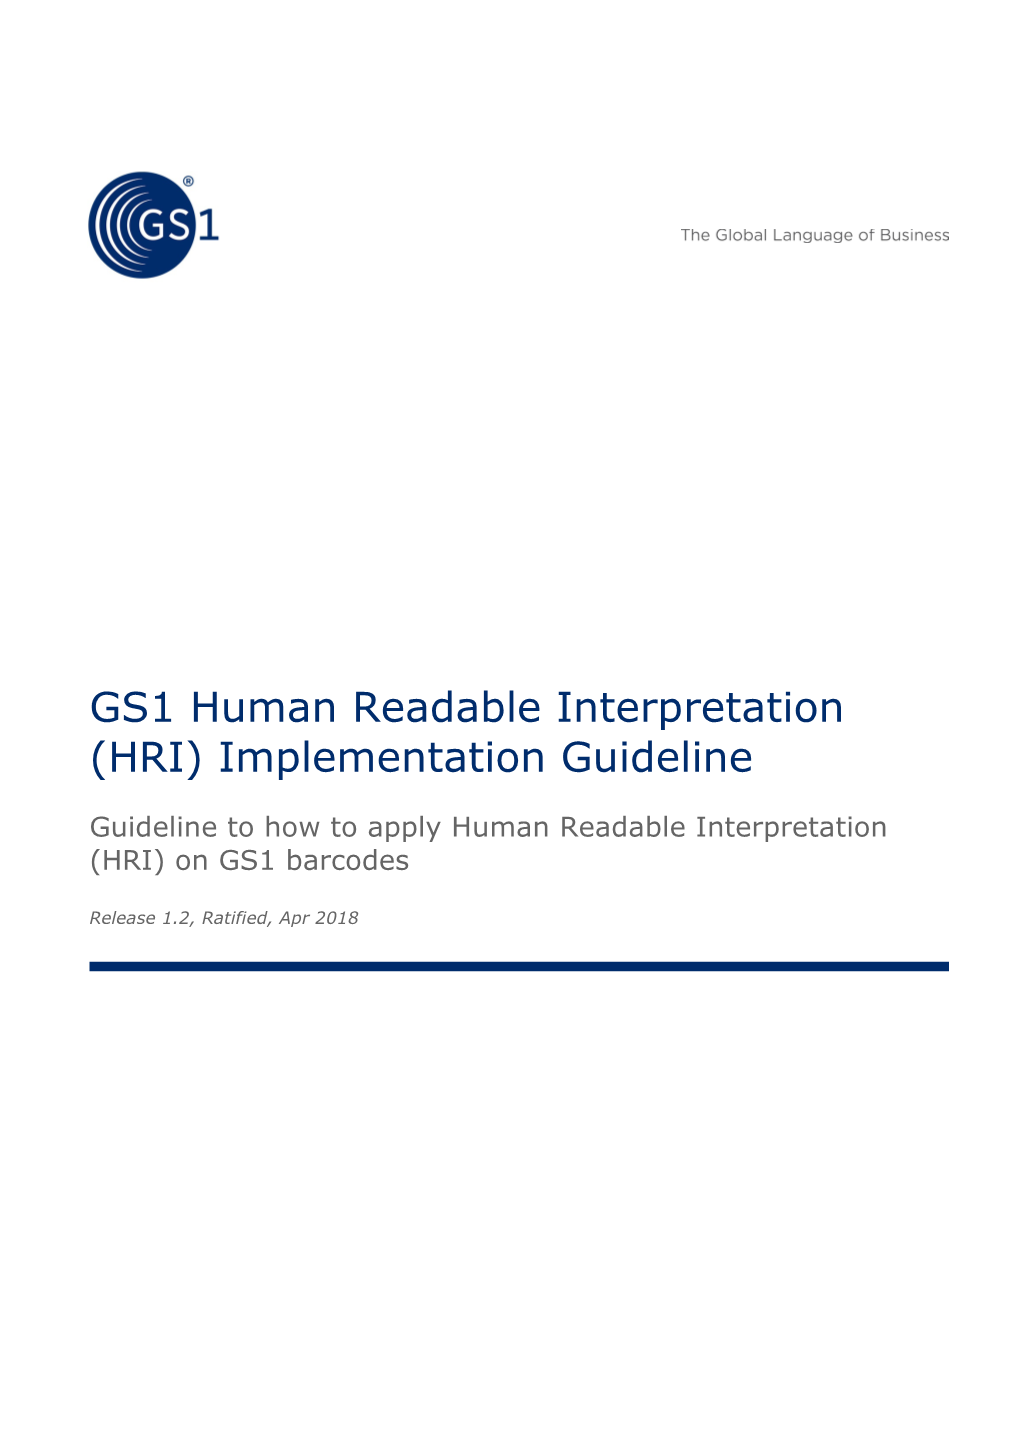 GS1 Human Readable Interpretation (HRI) Implementation Guideline